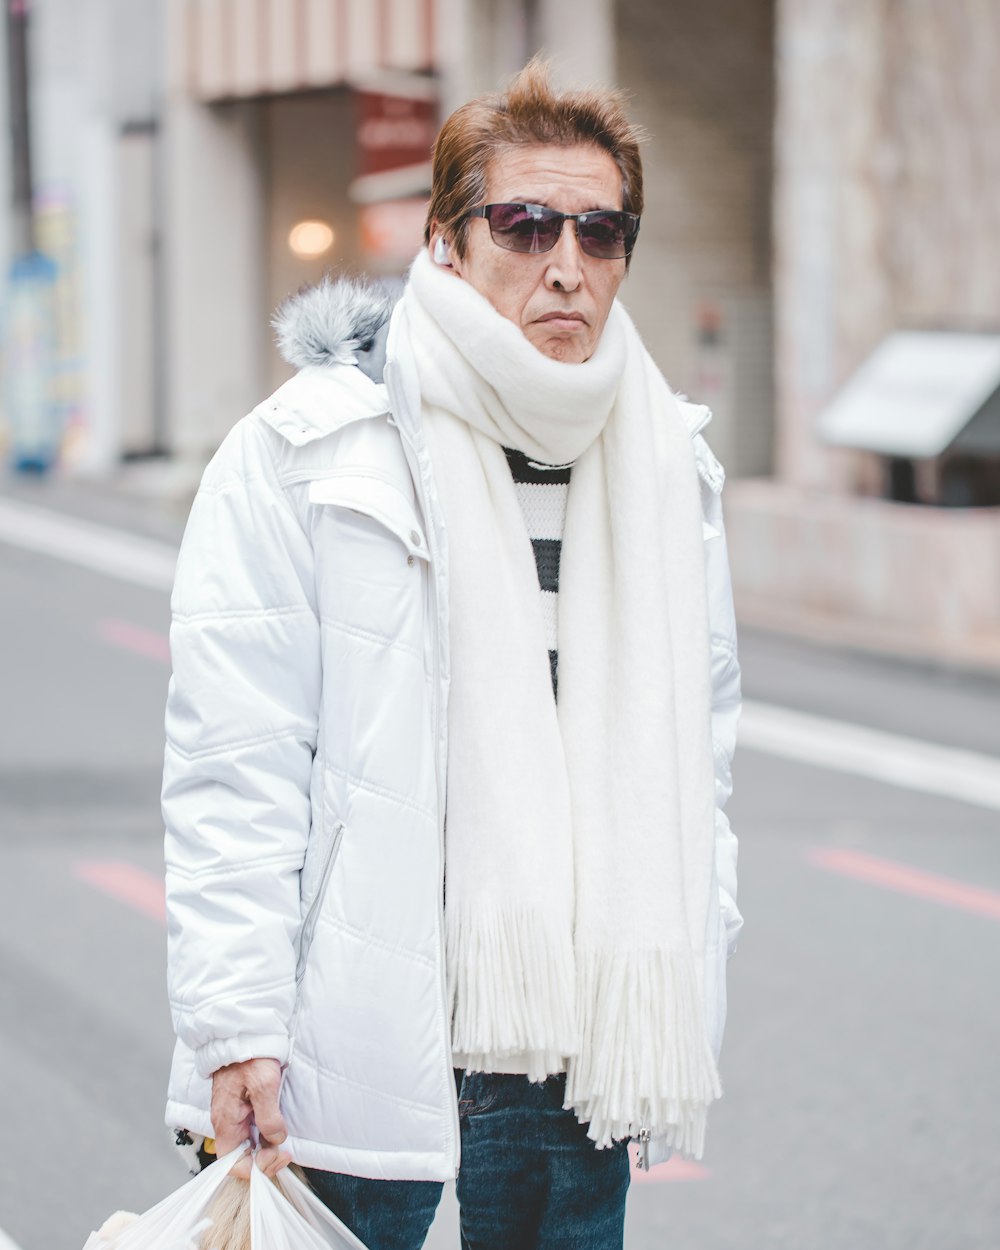 Man in white parka jacket and white scarf walking on street at daytime  photo – Free Scarf Image on Unsplash